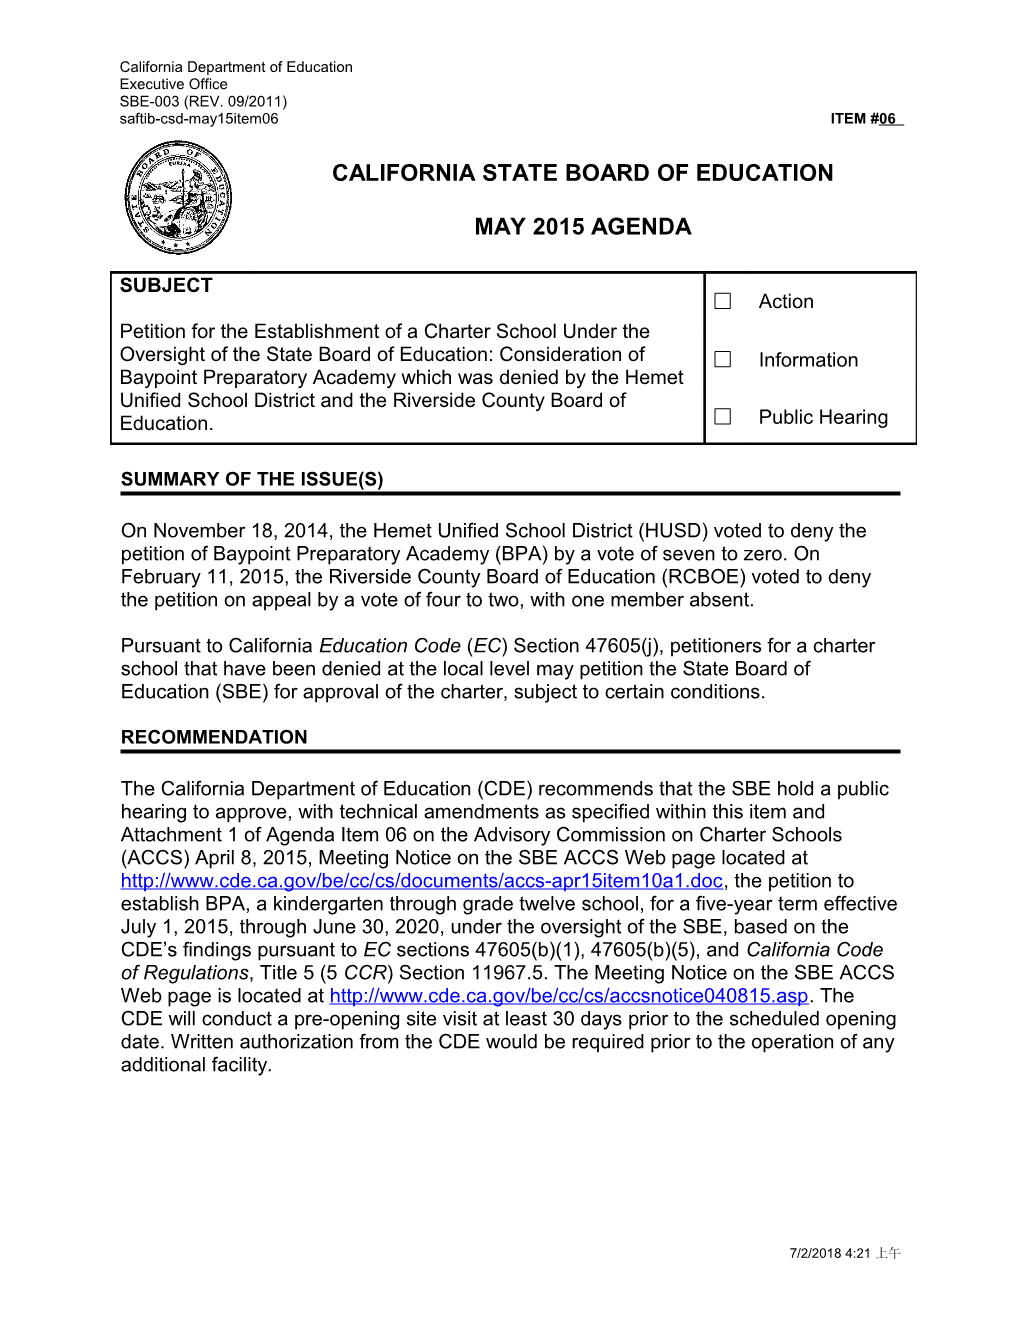 May 2015 Agenda Item 06 - Meeting Agendas (CA State Board of Education)